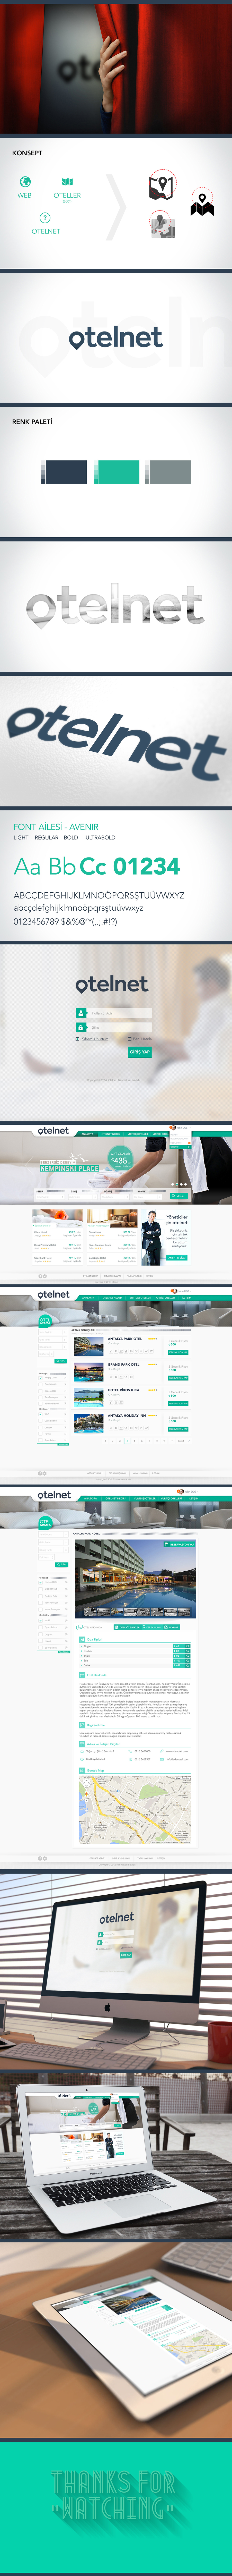 hotel hotel booking logo Web Webdesign design